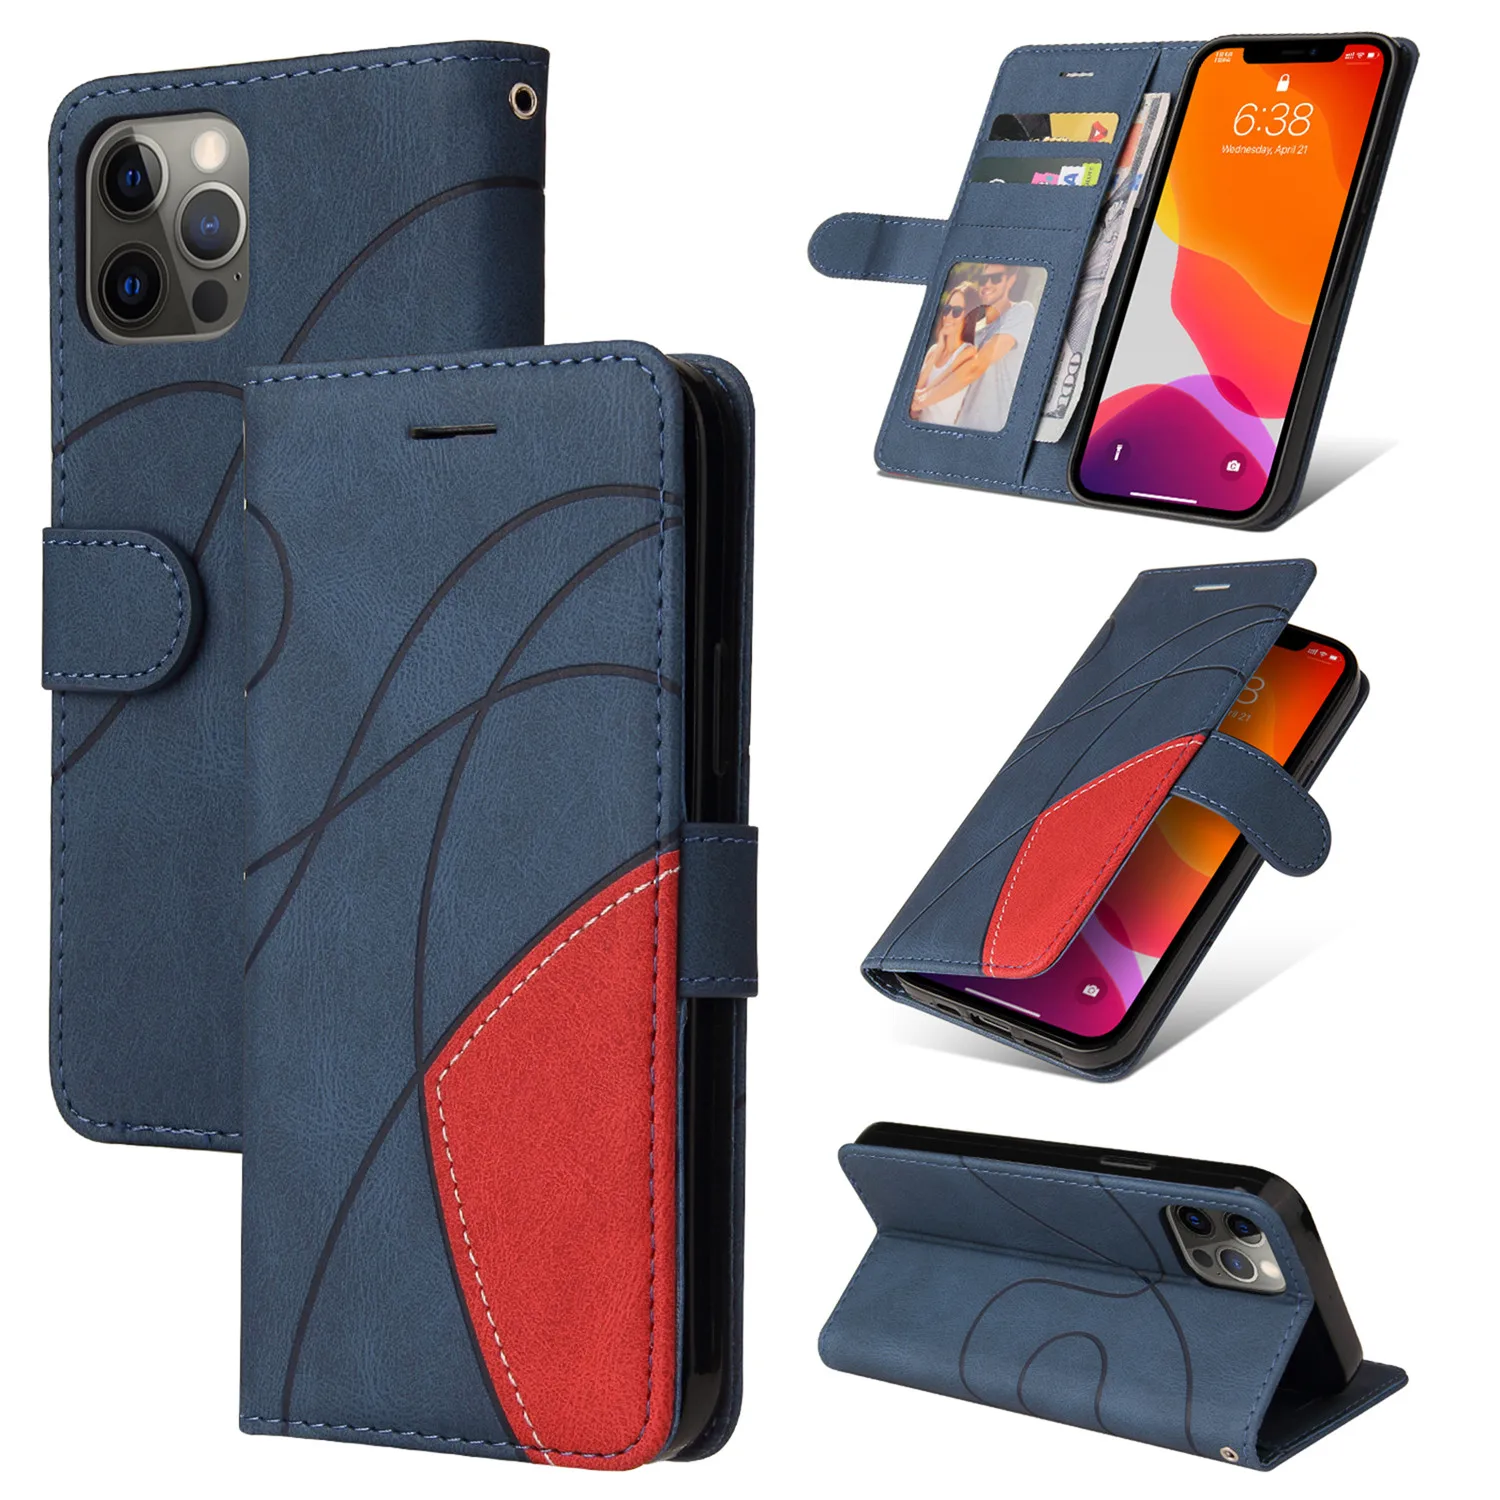 

A6 A7 A8 A9 J4 J6 Plus 2018 Leather Wallet Phone Case For Samsung Galaxy J1 2016 J3 J5 J7 A3 A5 2017 Flip Stand Bag Cover Coque